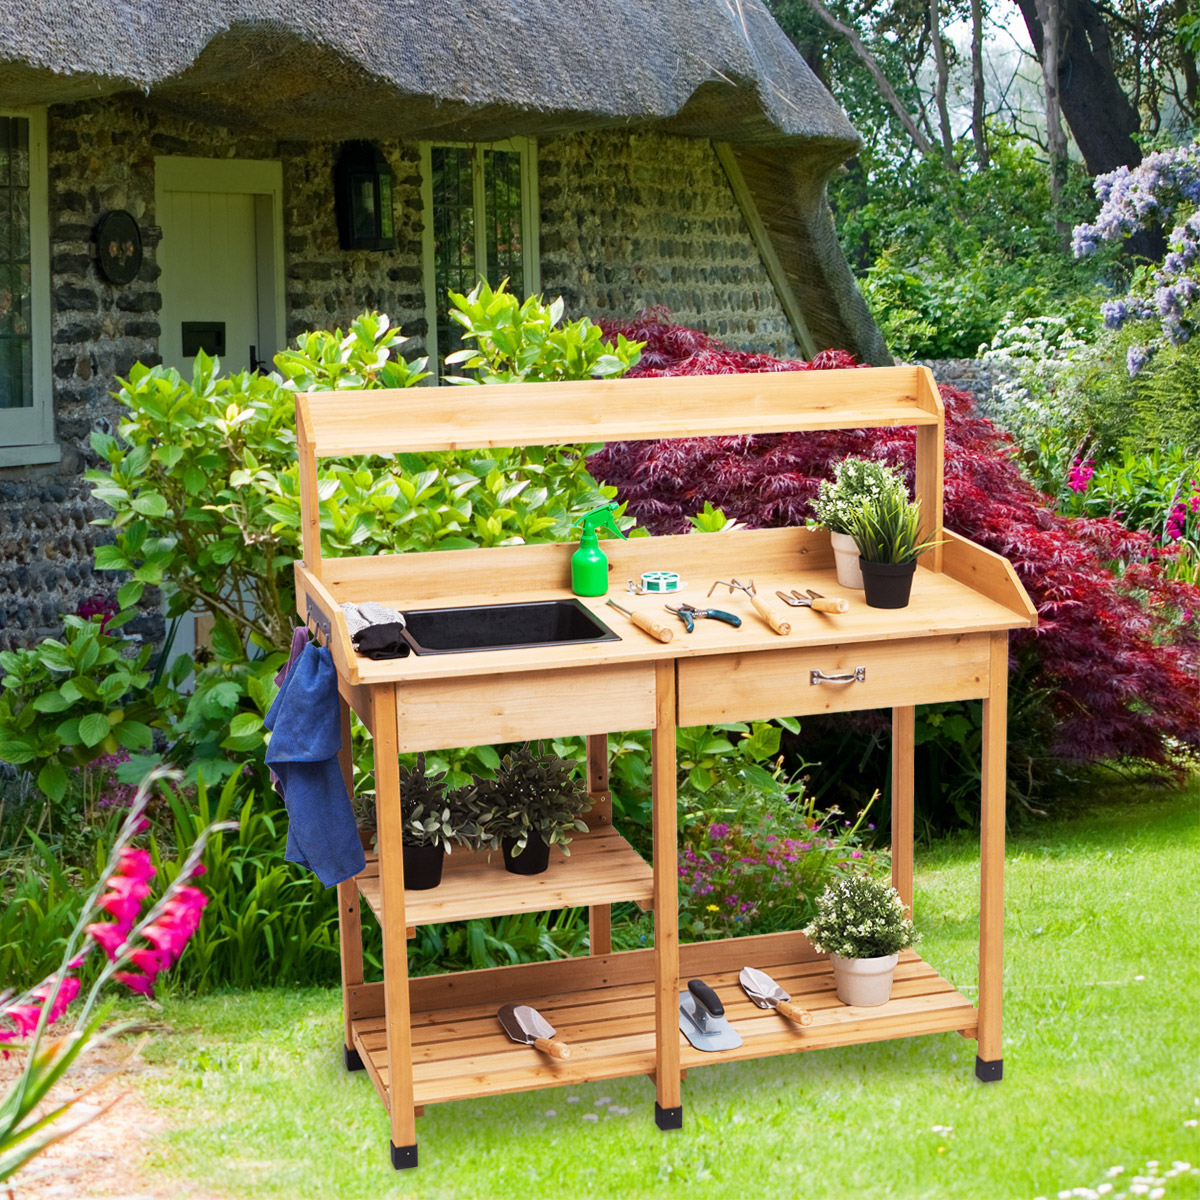 Outdoor Garden Potting Bench Lawn Patio Table Storage Shelf Work Station